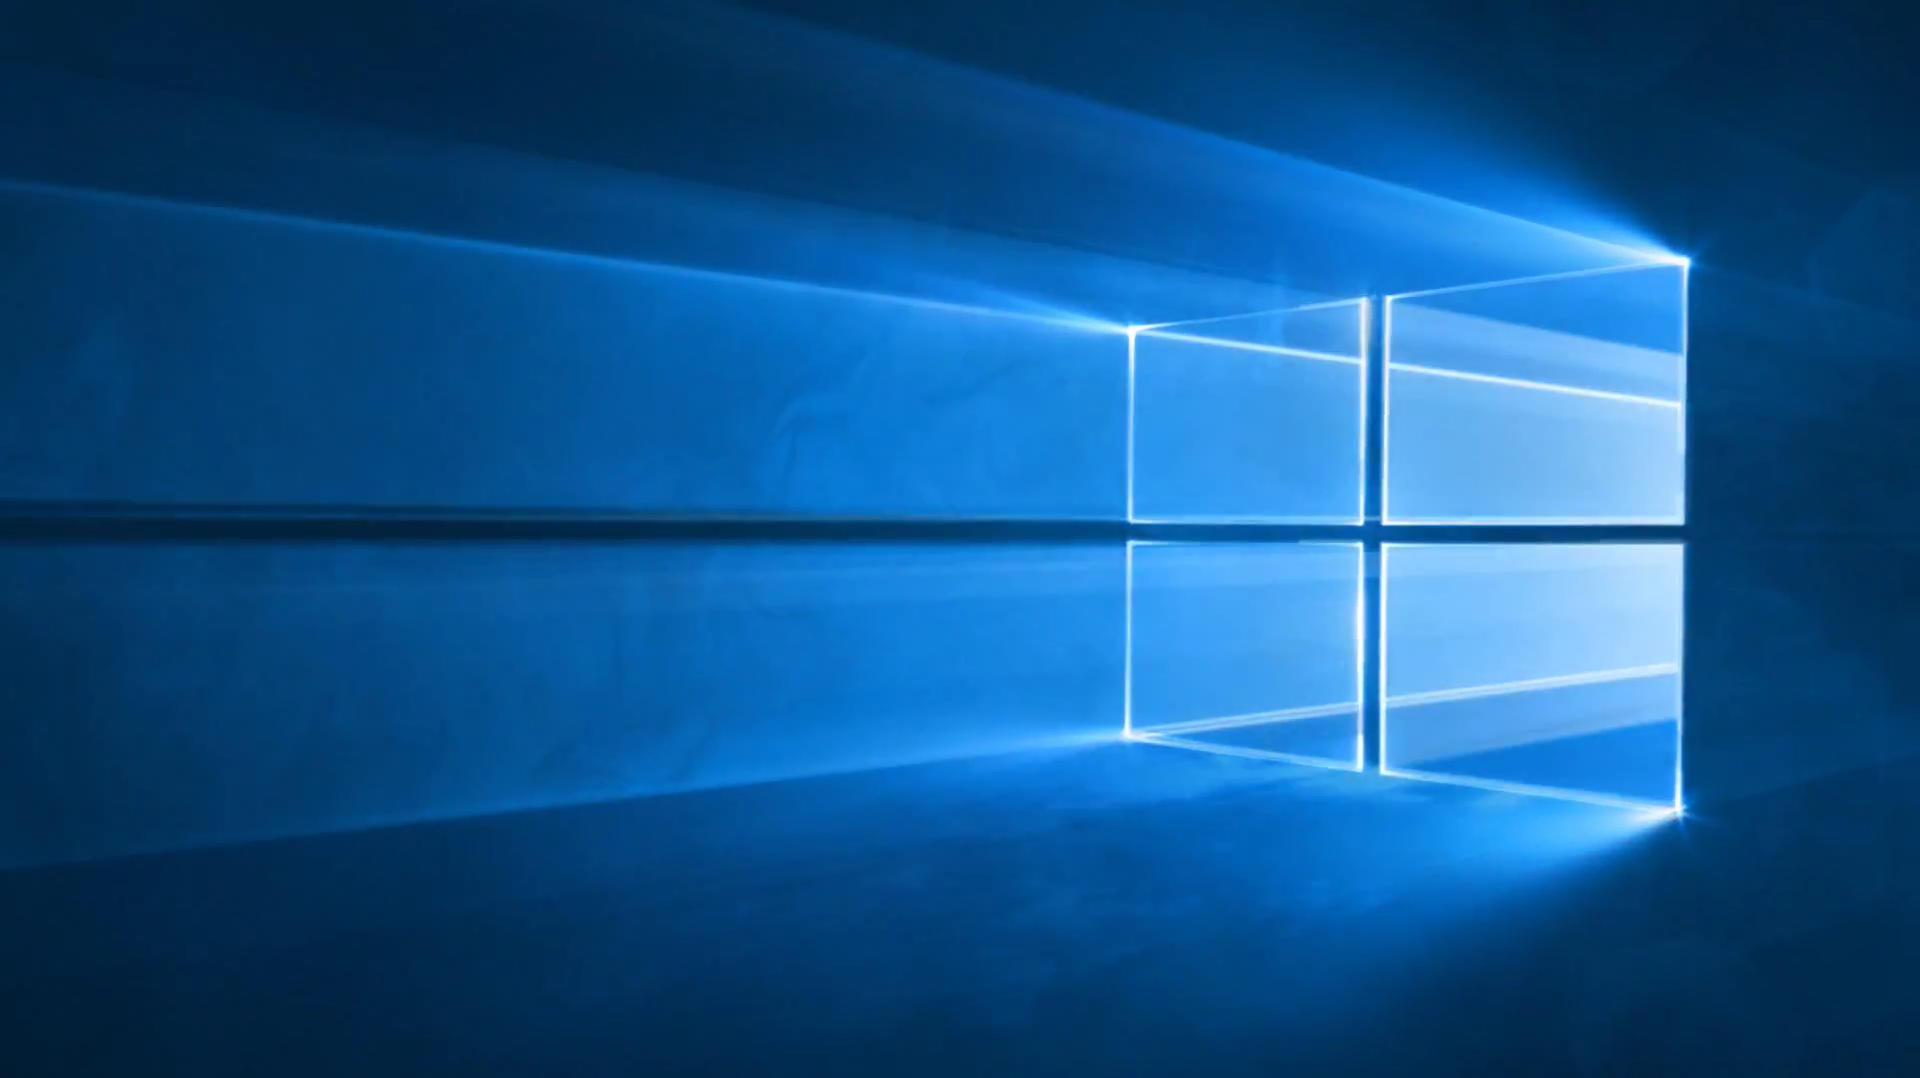  net Microsoft showcases Windows Hero wallpaper made from light